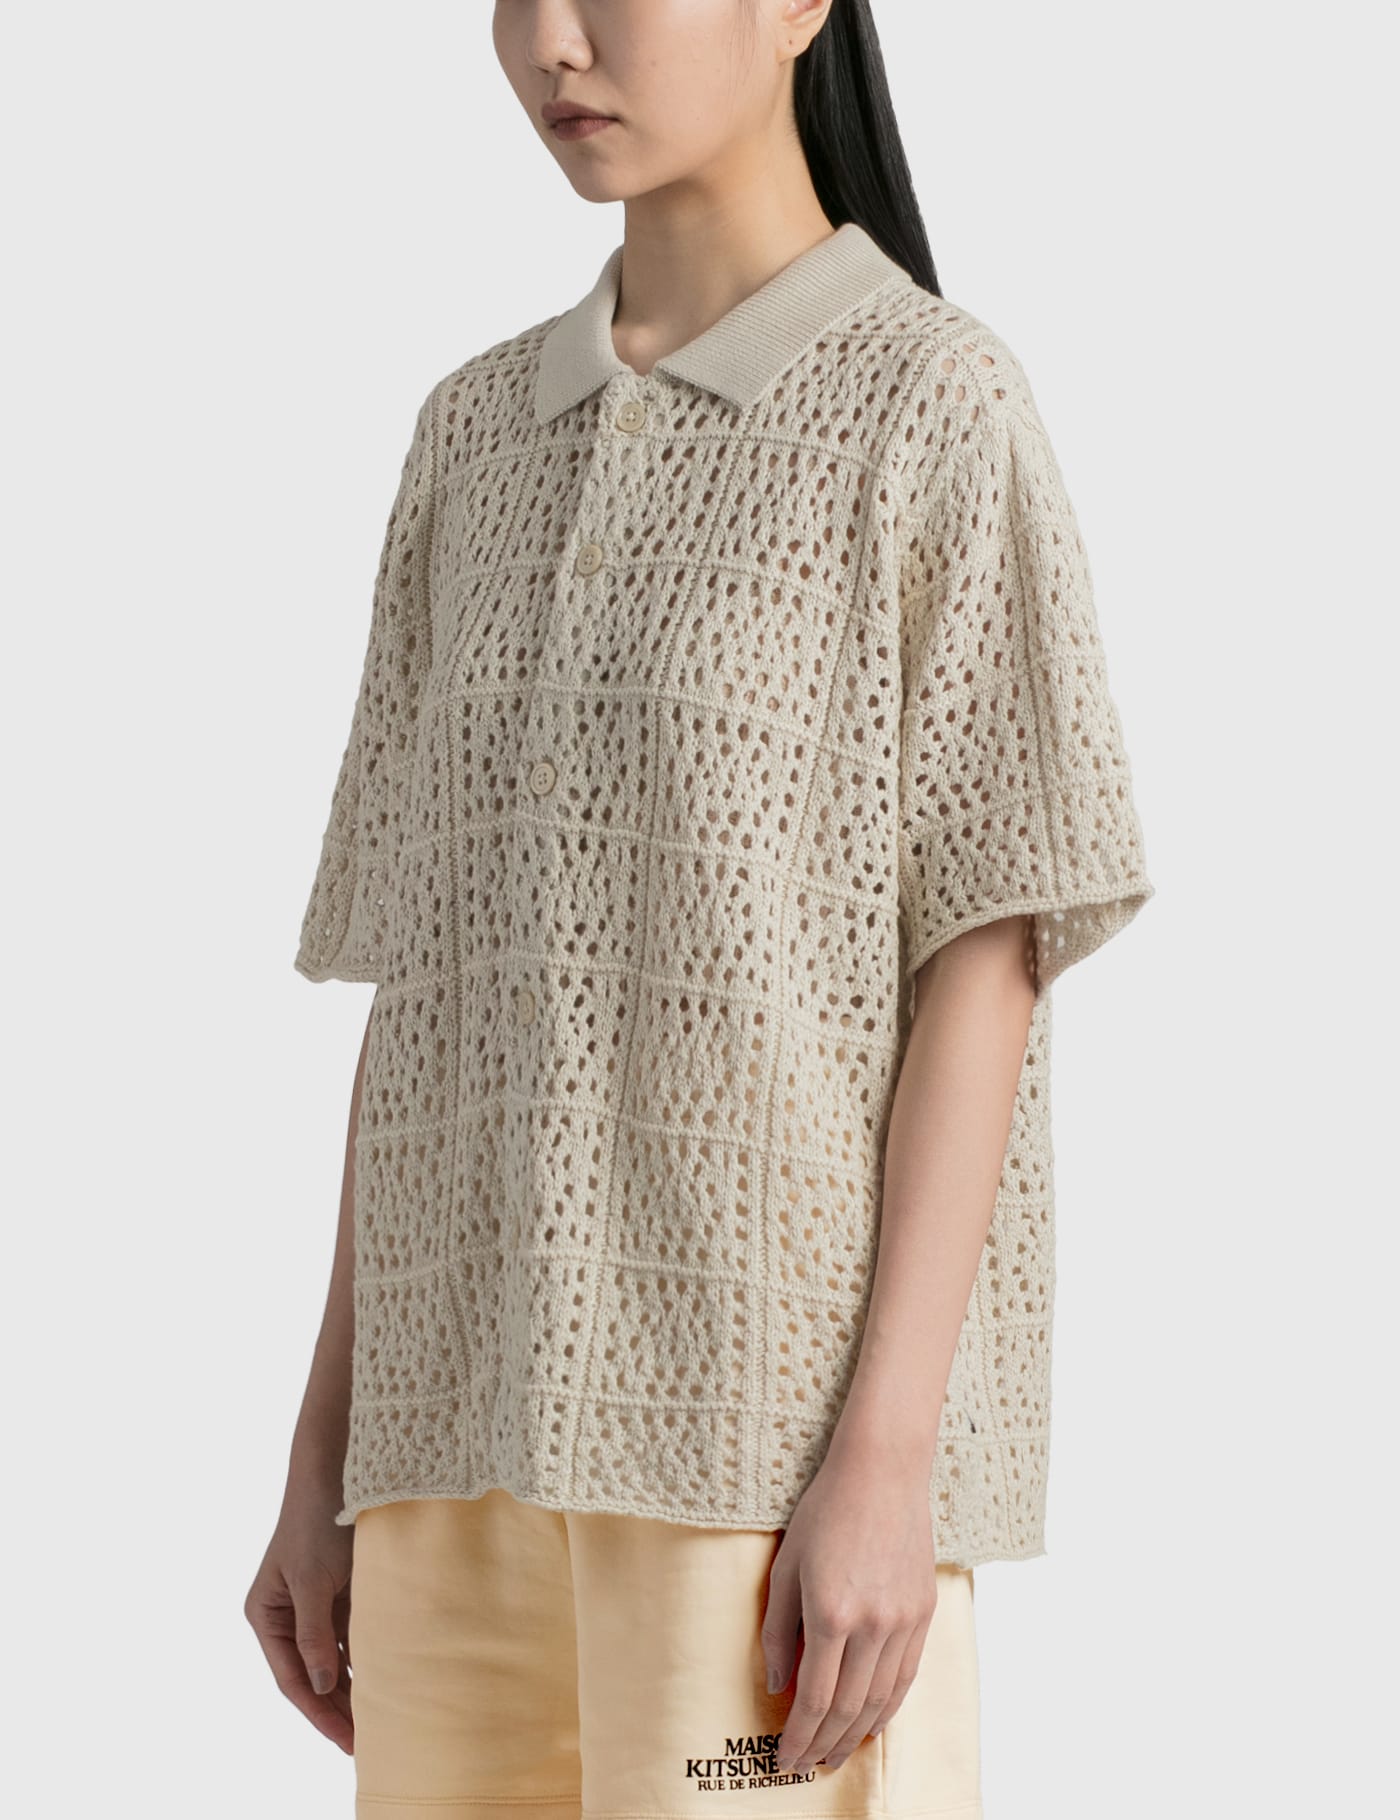 Stüssy - Crochet Shirt | HBX - Globally Curated Fashion and 